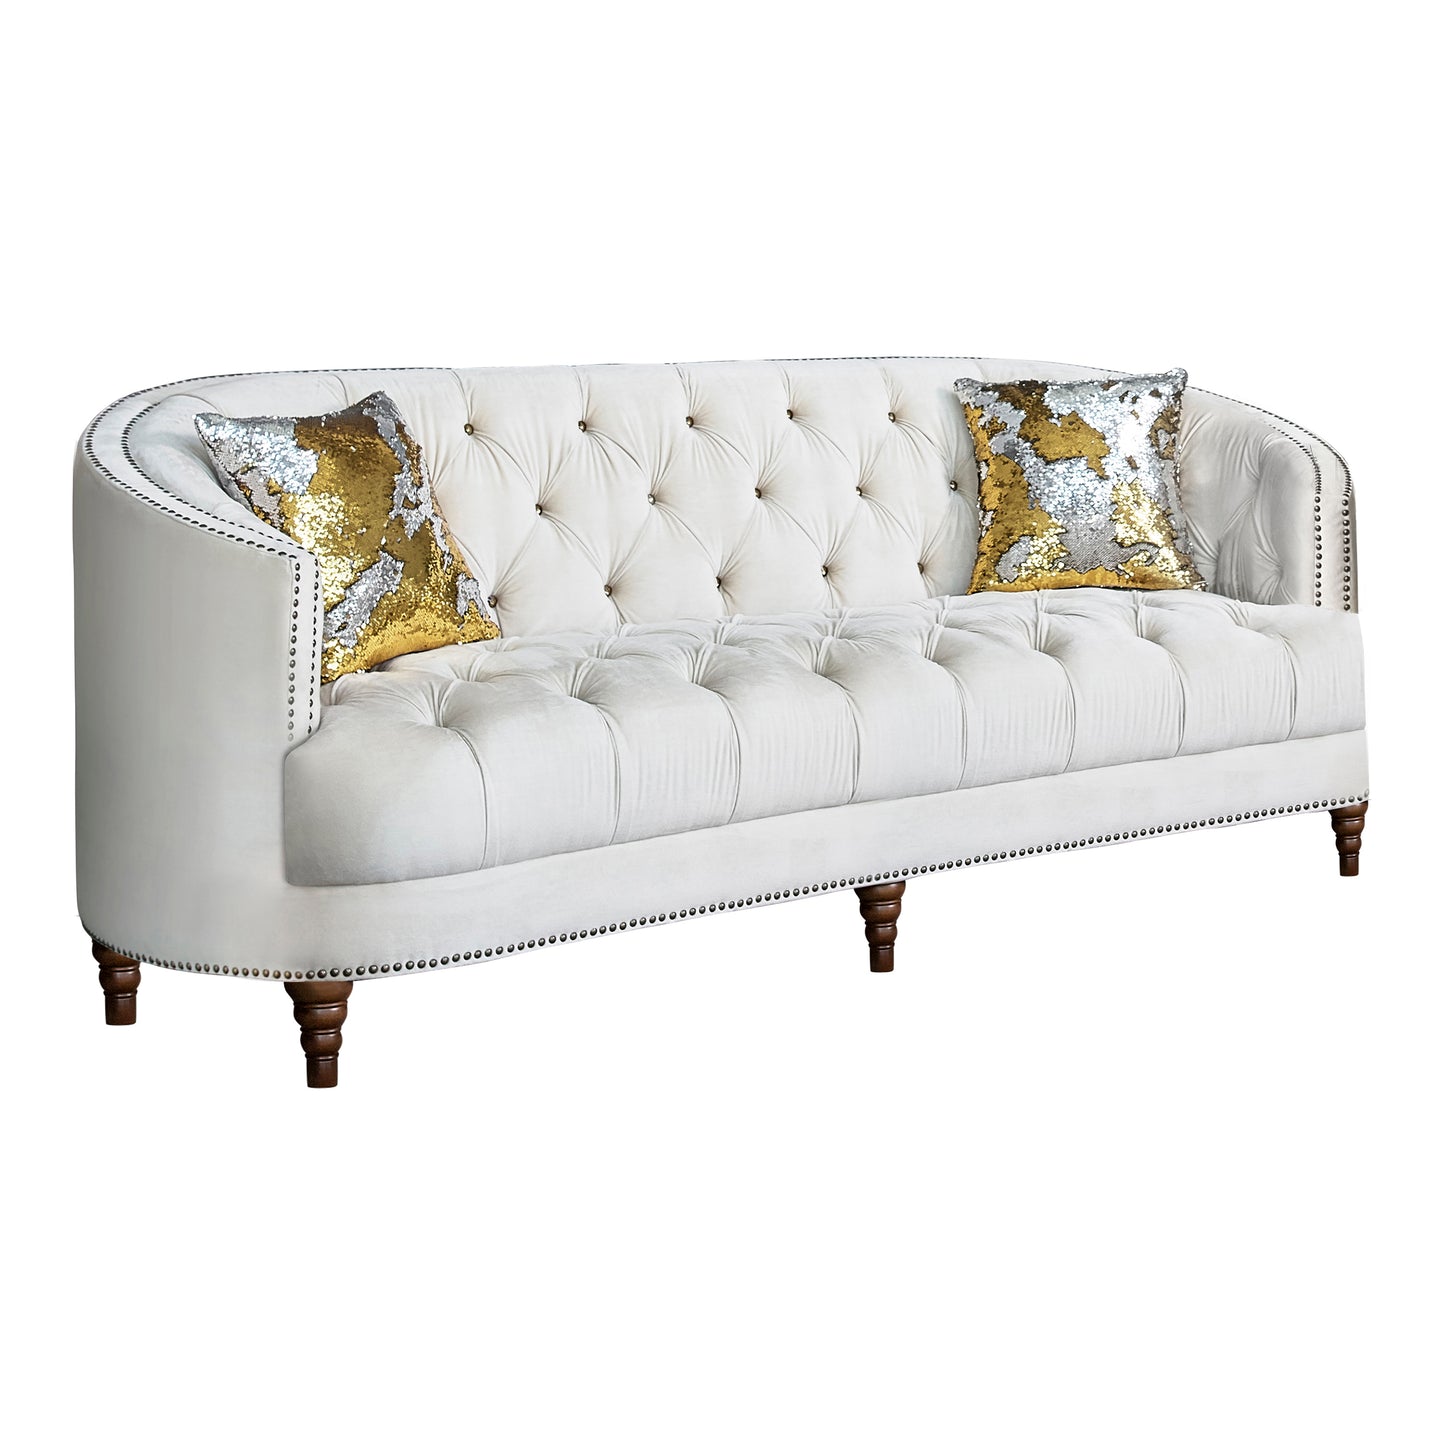 Avonlea 2-piece Upholstered Sloped Arm Living Room Set Champagne